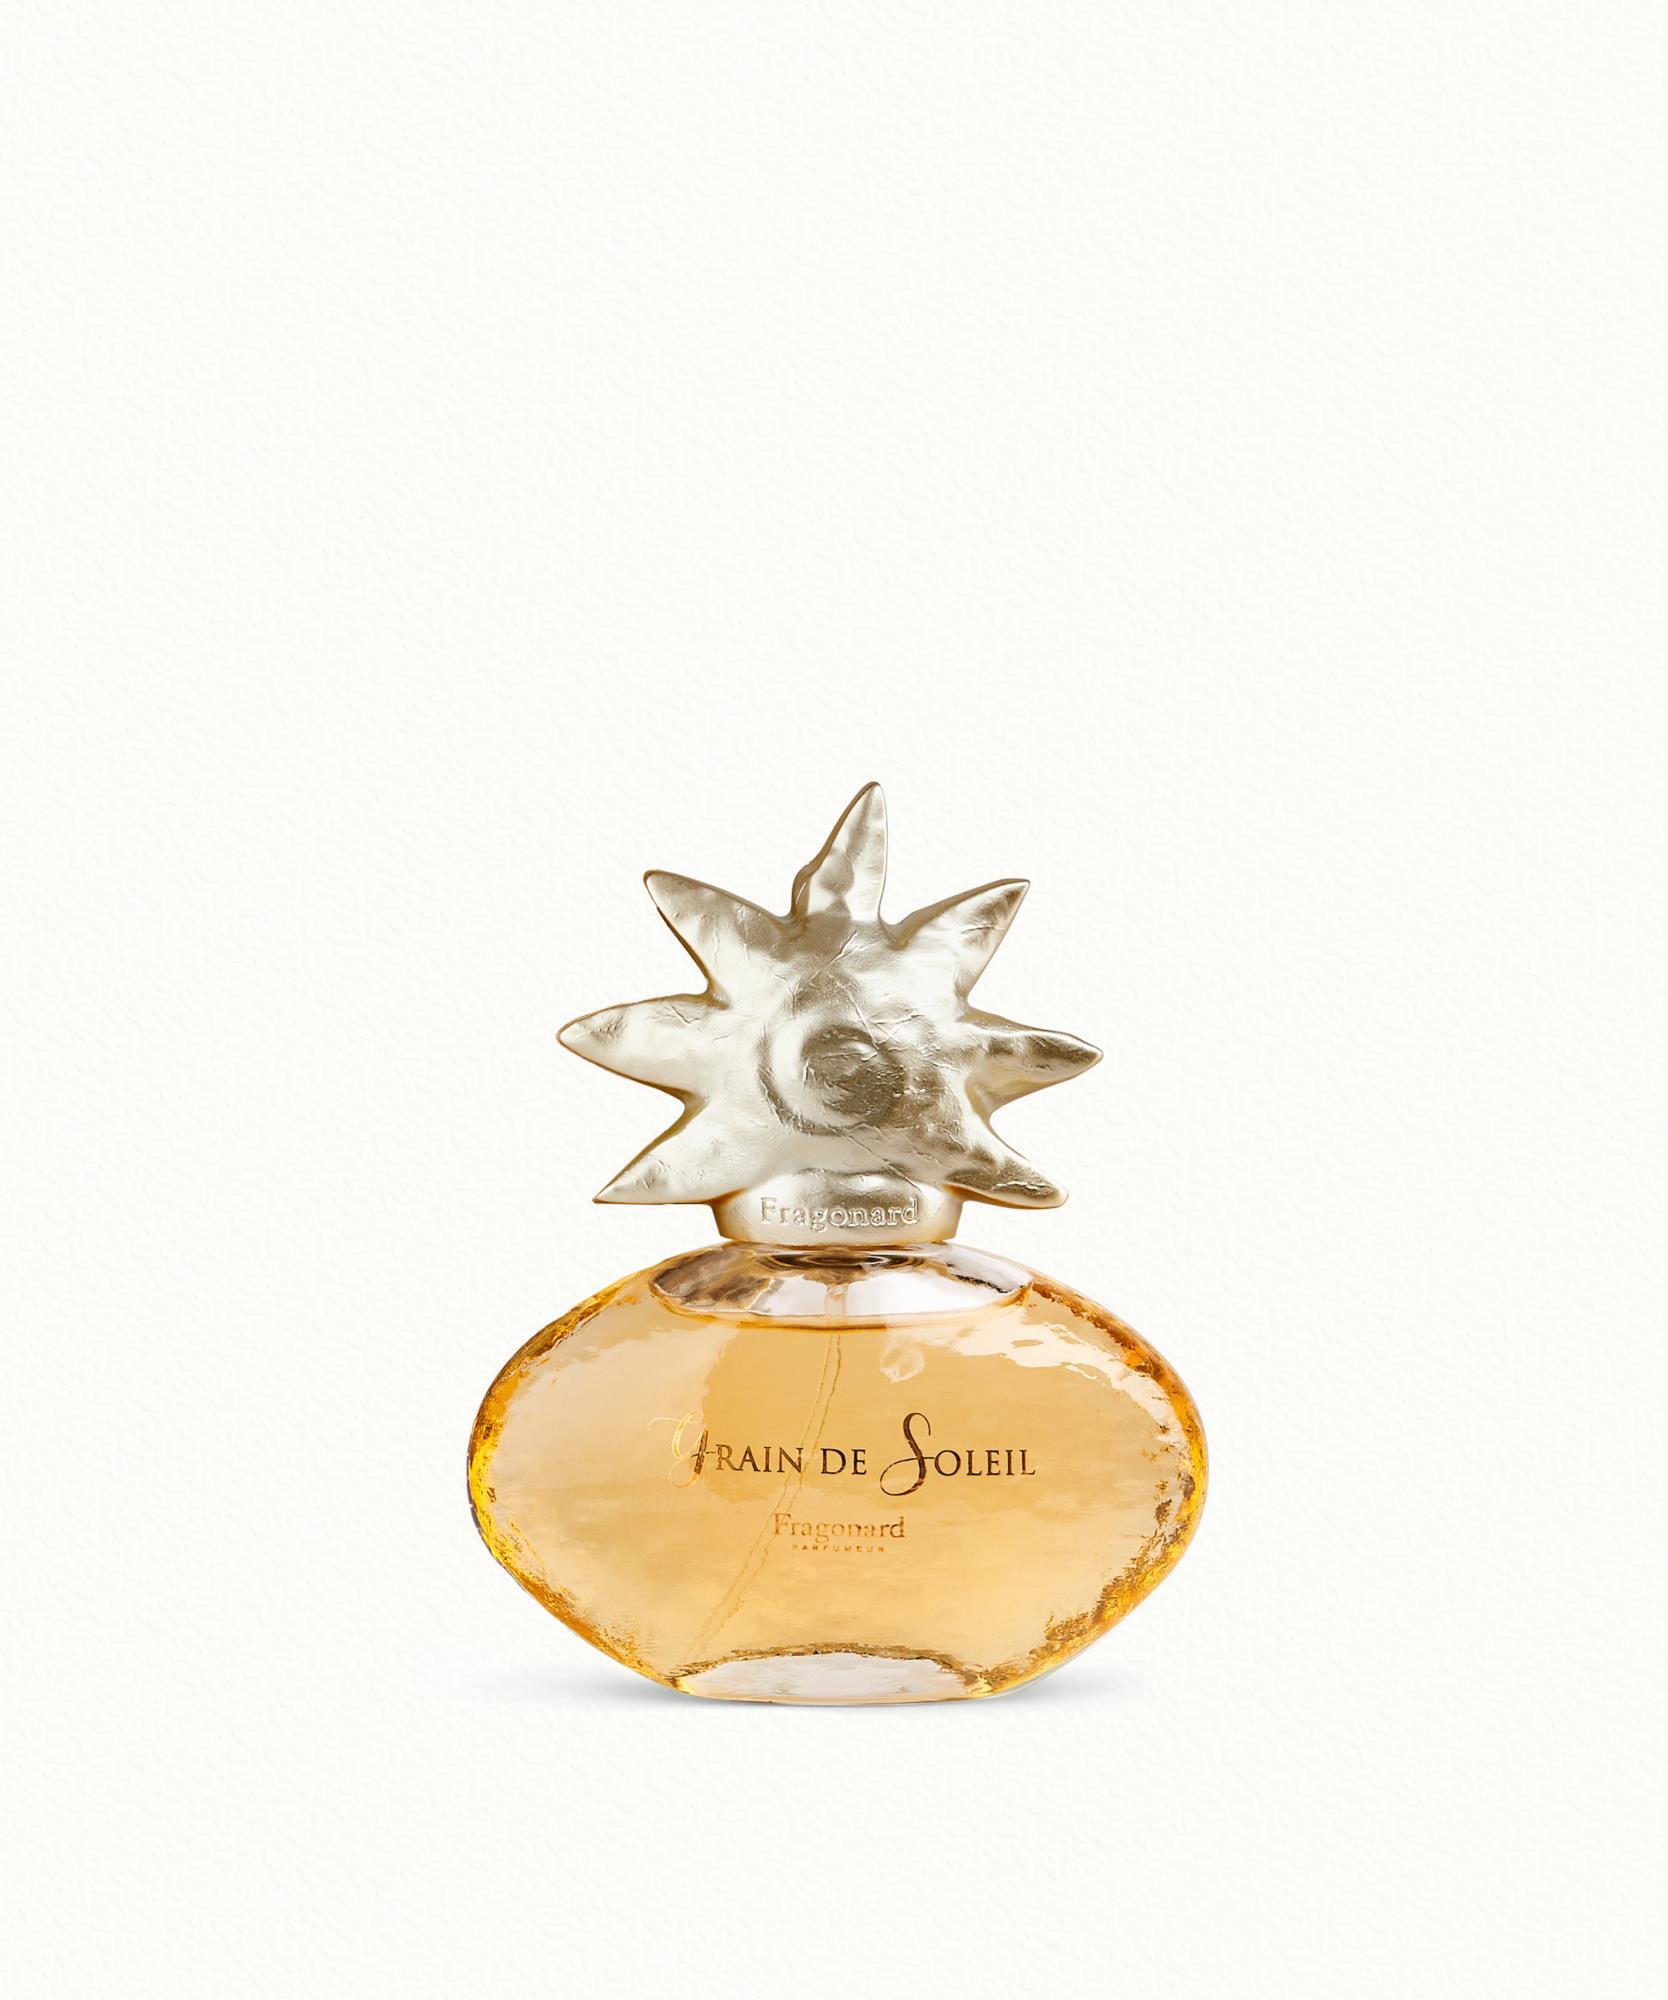 Grain de Soleil Eau de Parfum 50ml Fragonard - $ 70.00